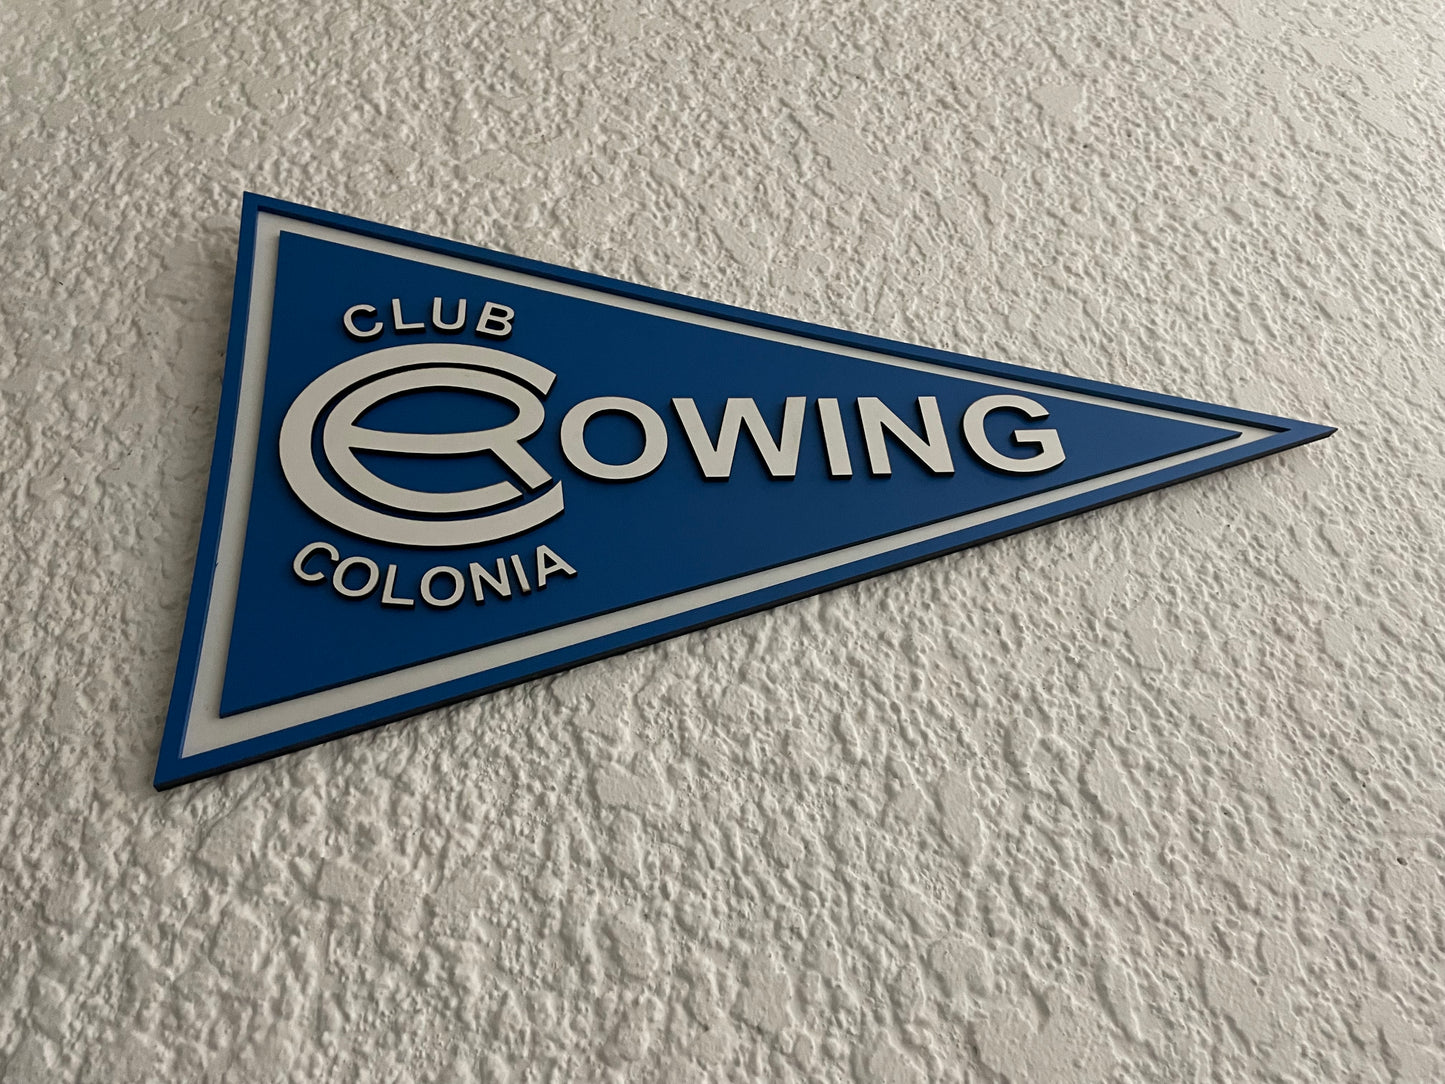 Club Rowing Colonia